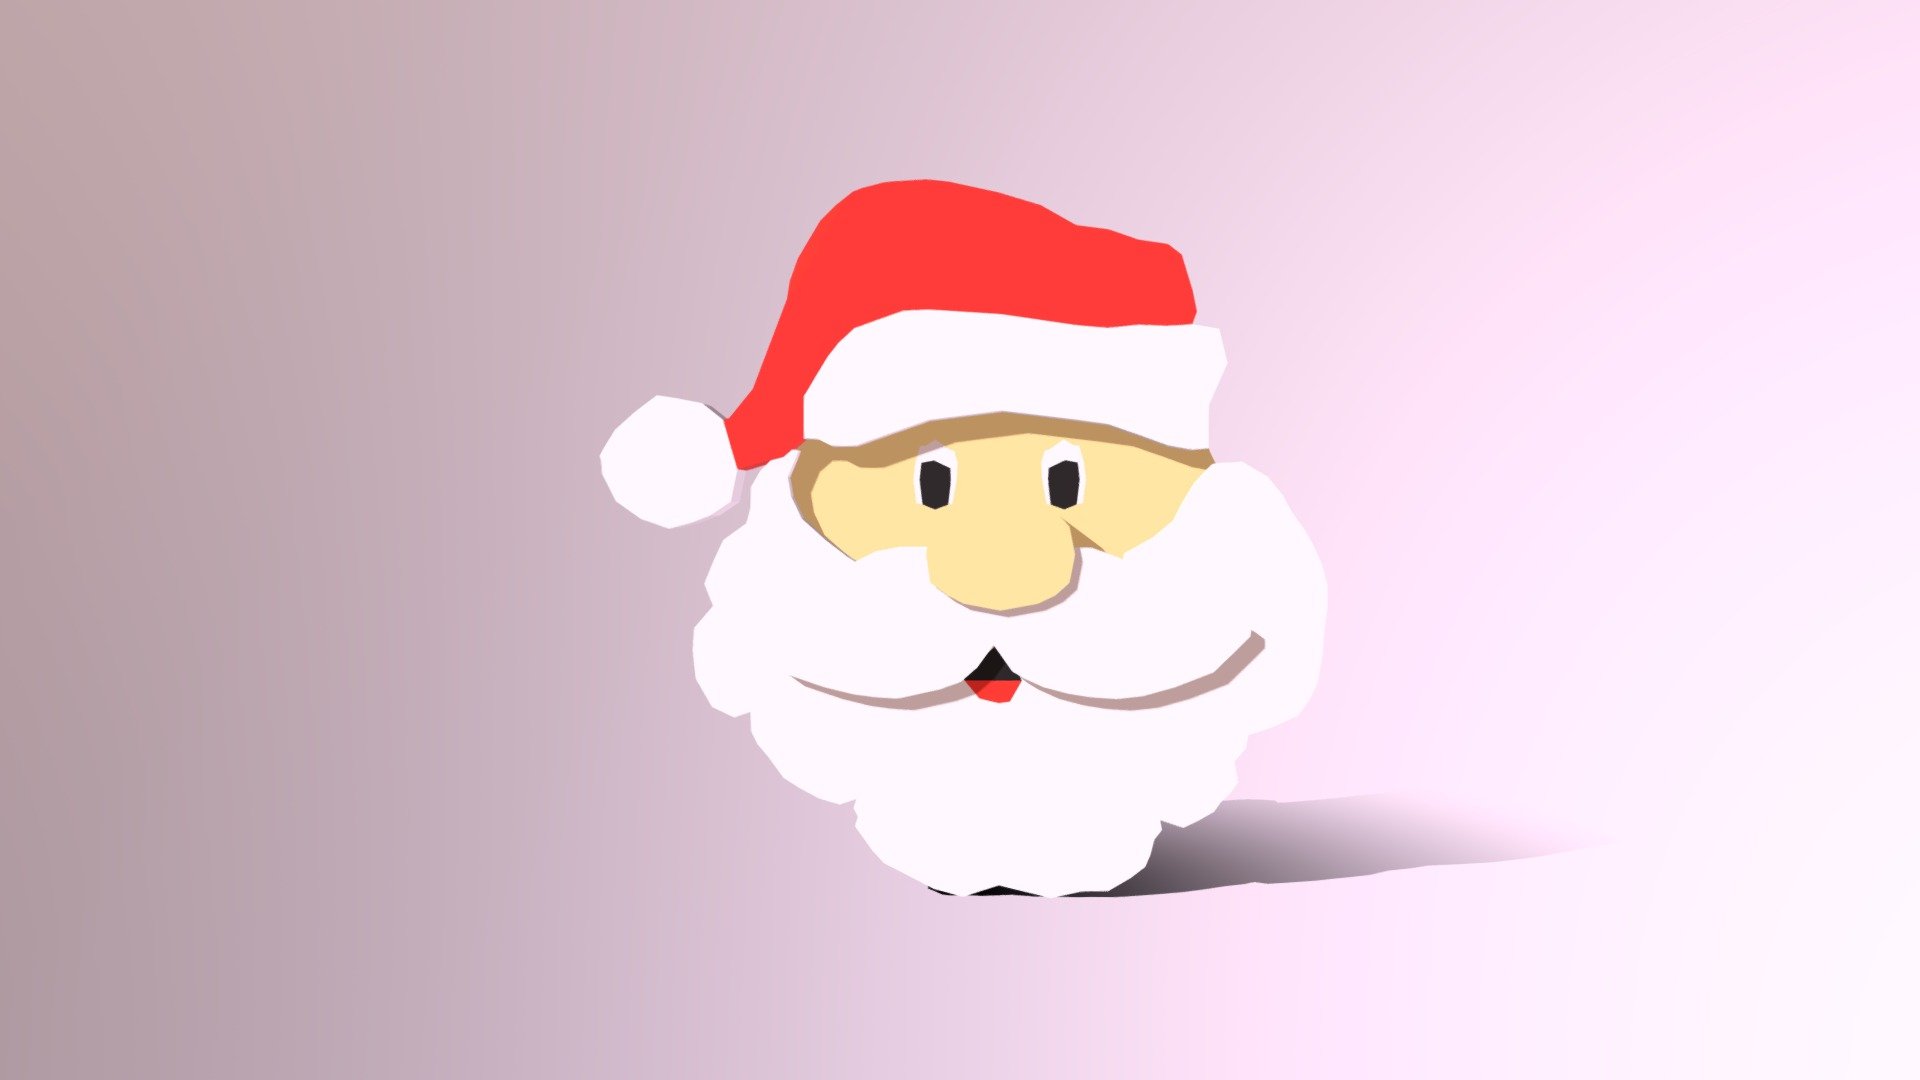 ArtStation - Low Poly Cartoon Santa Claus Face Decorative Object